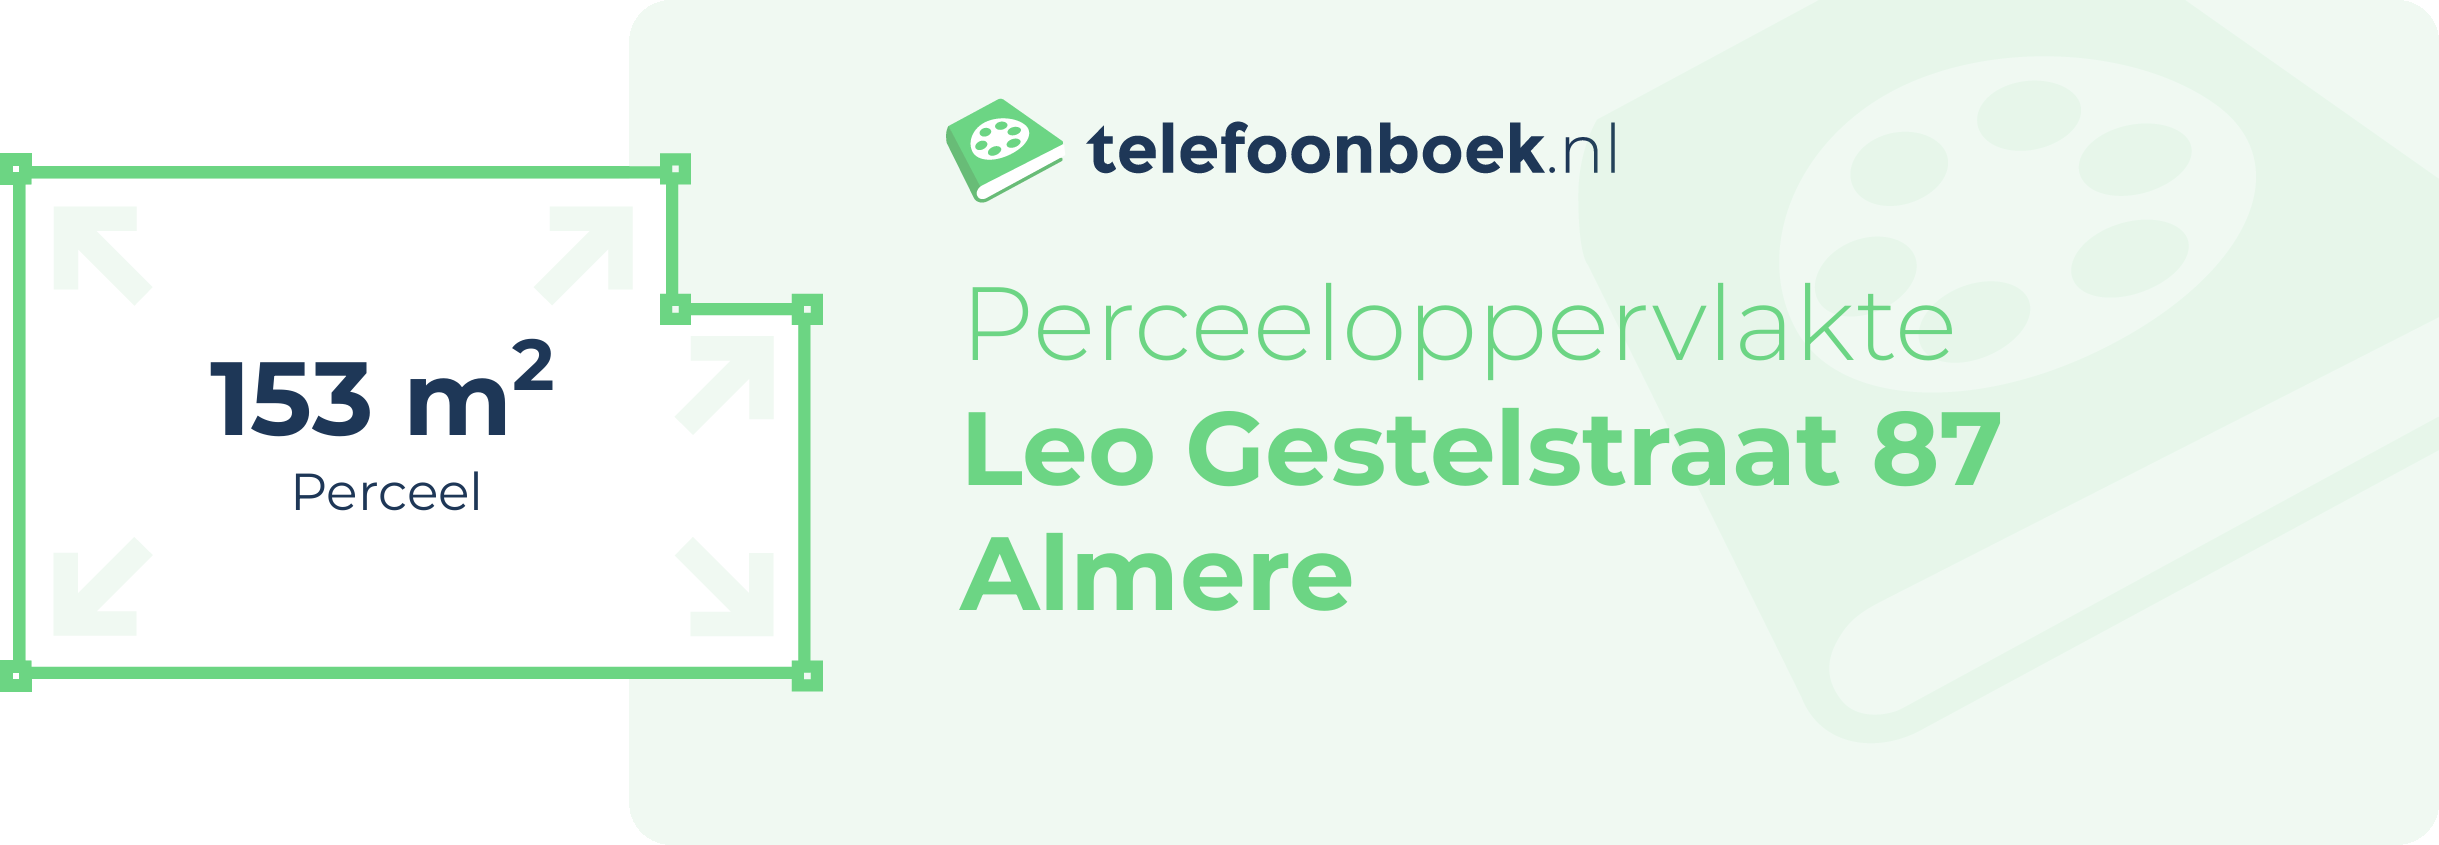 Perceeloppervlakte Leo Gestelstraat 87 Almere